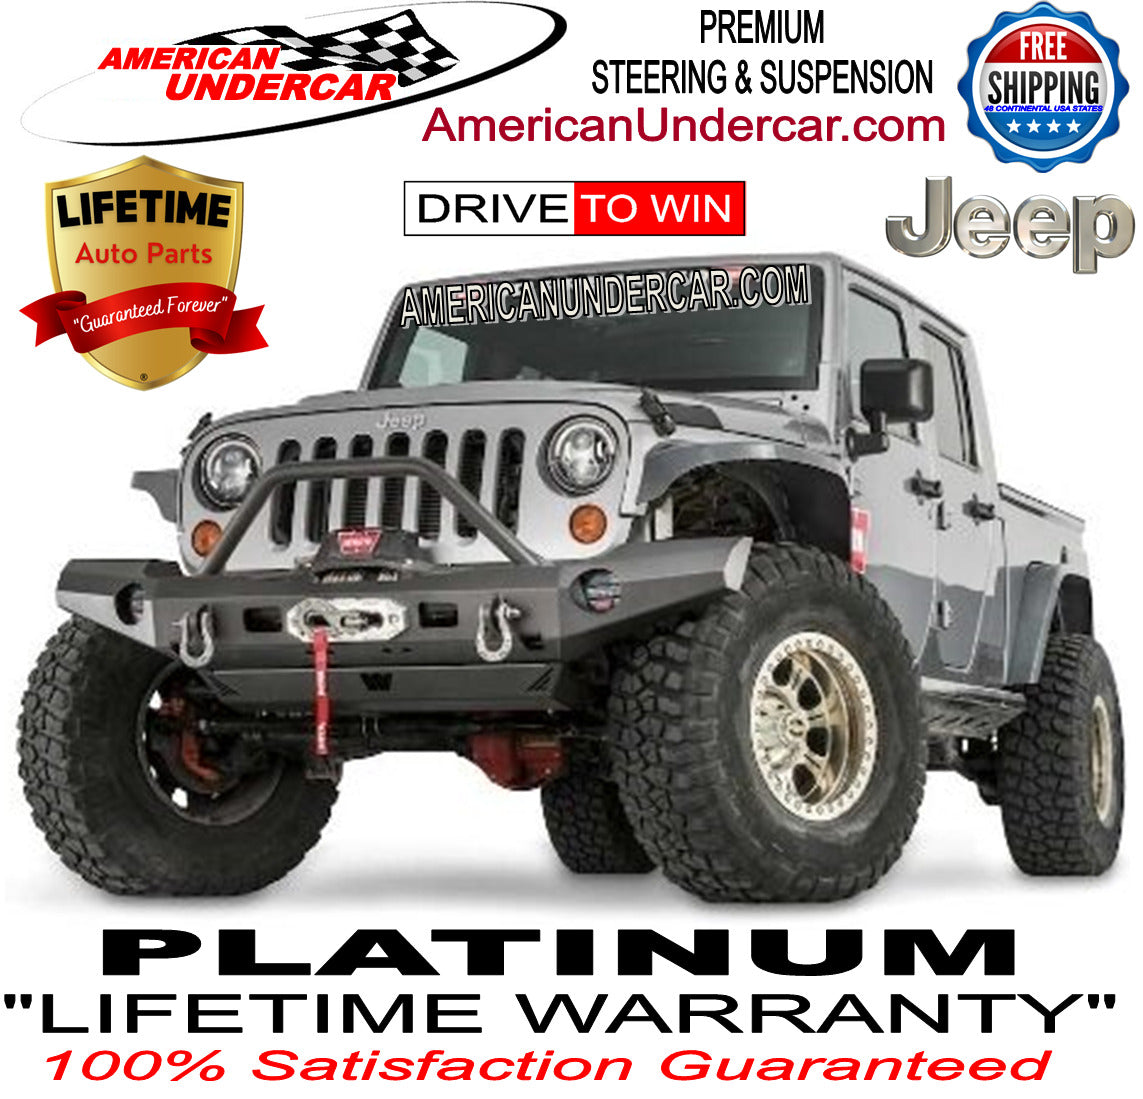 Lifetime Ball Joint Kit Upper and Lower for 1997-2006 Jeep Wrangler